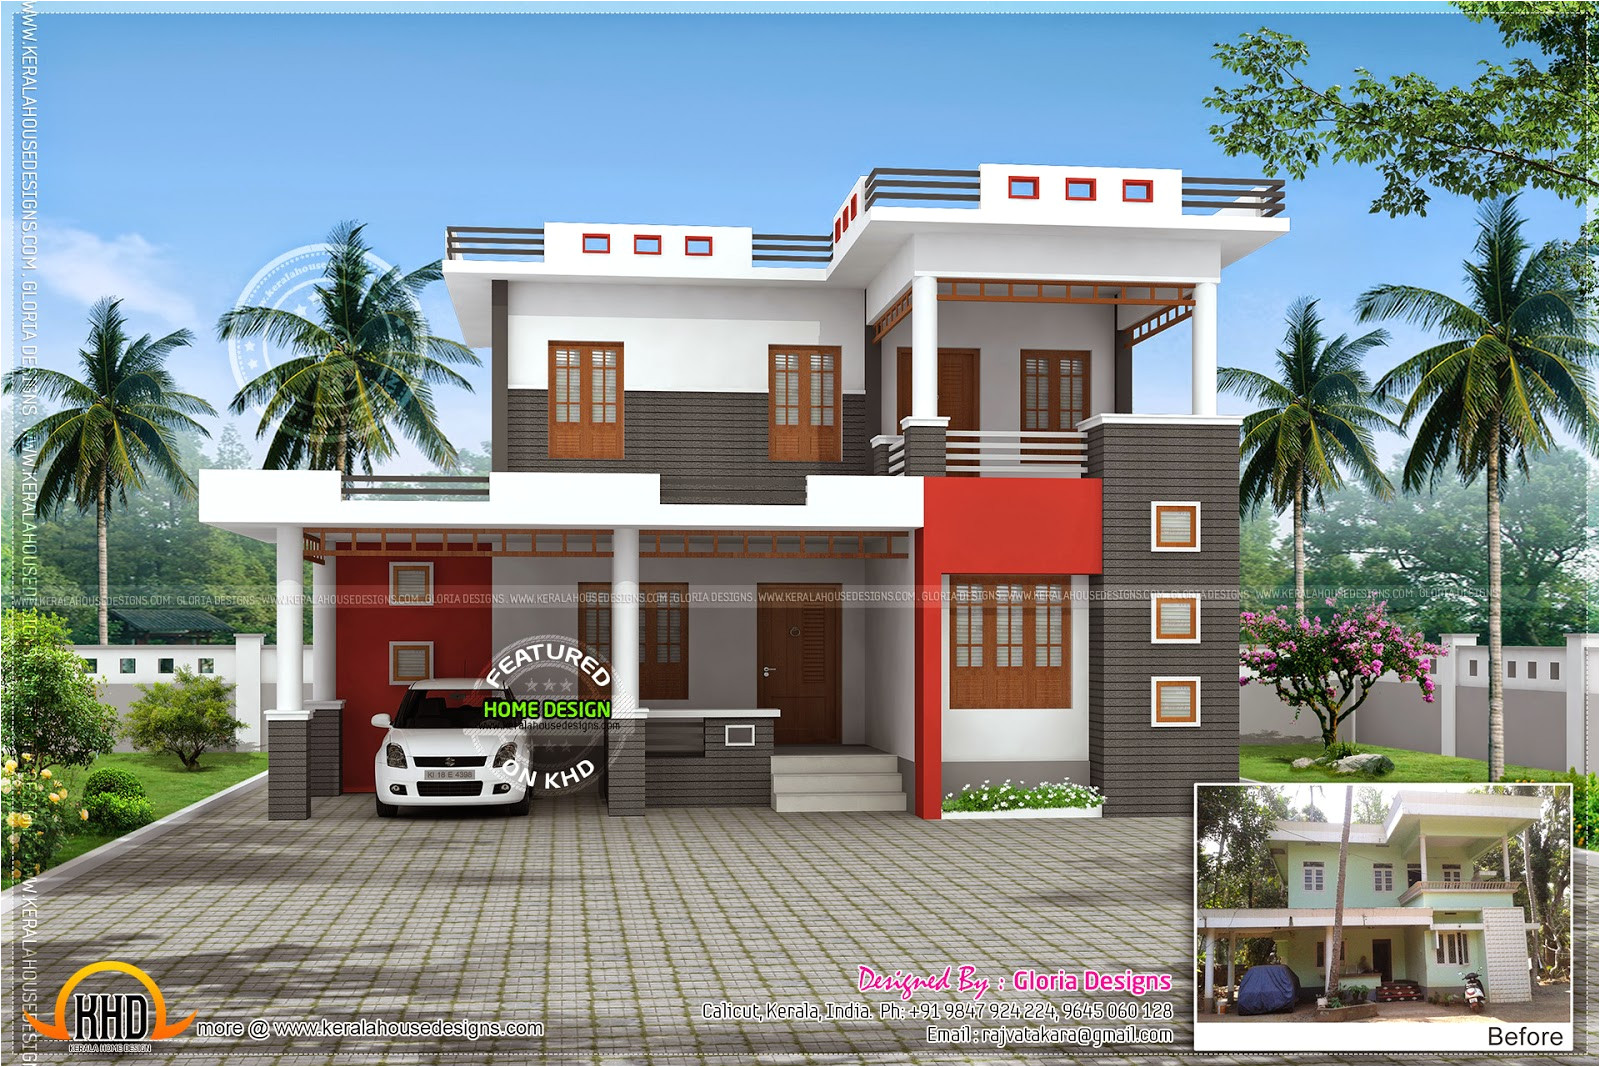 Home Renovation Plan Renovation 3d Model for An Old House Kerala Home Design